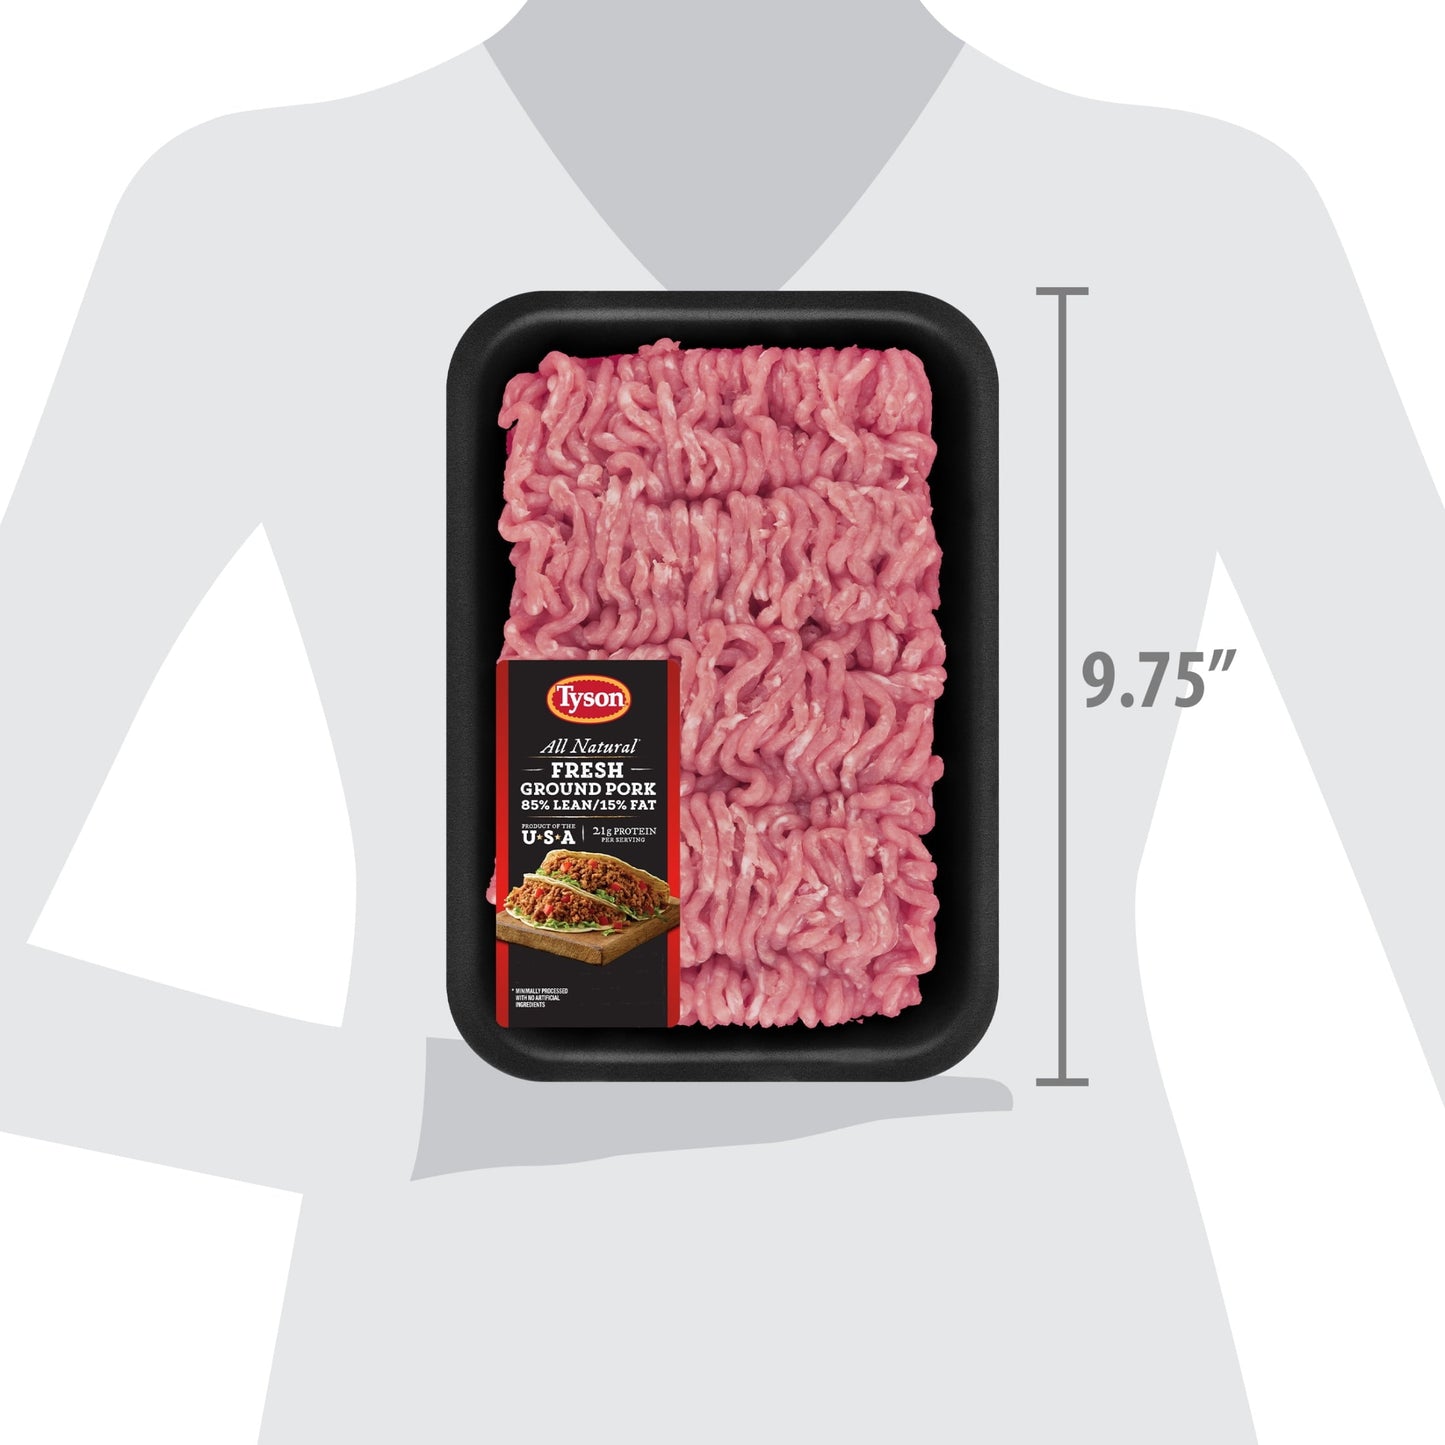 Tyson All Natural 85% Lean/15% Fat Ground Pork, 1.5 lb Tray